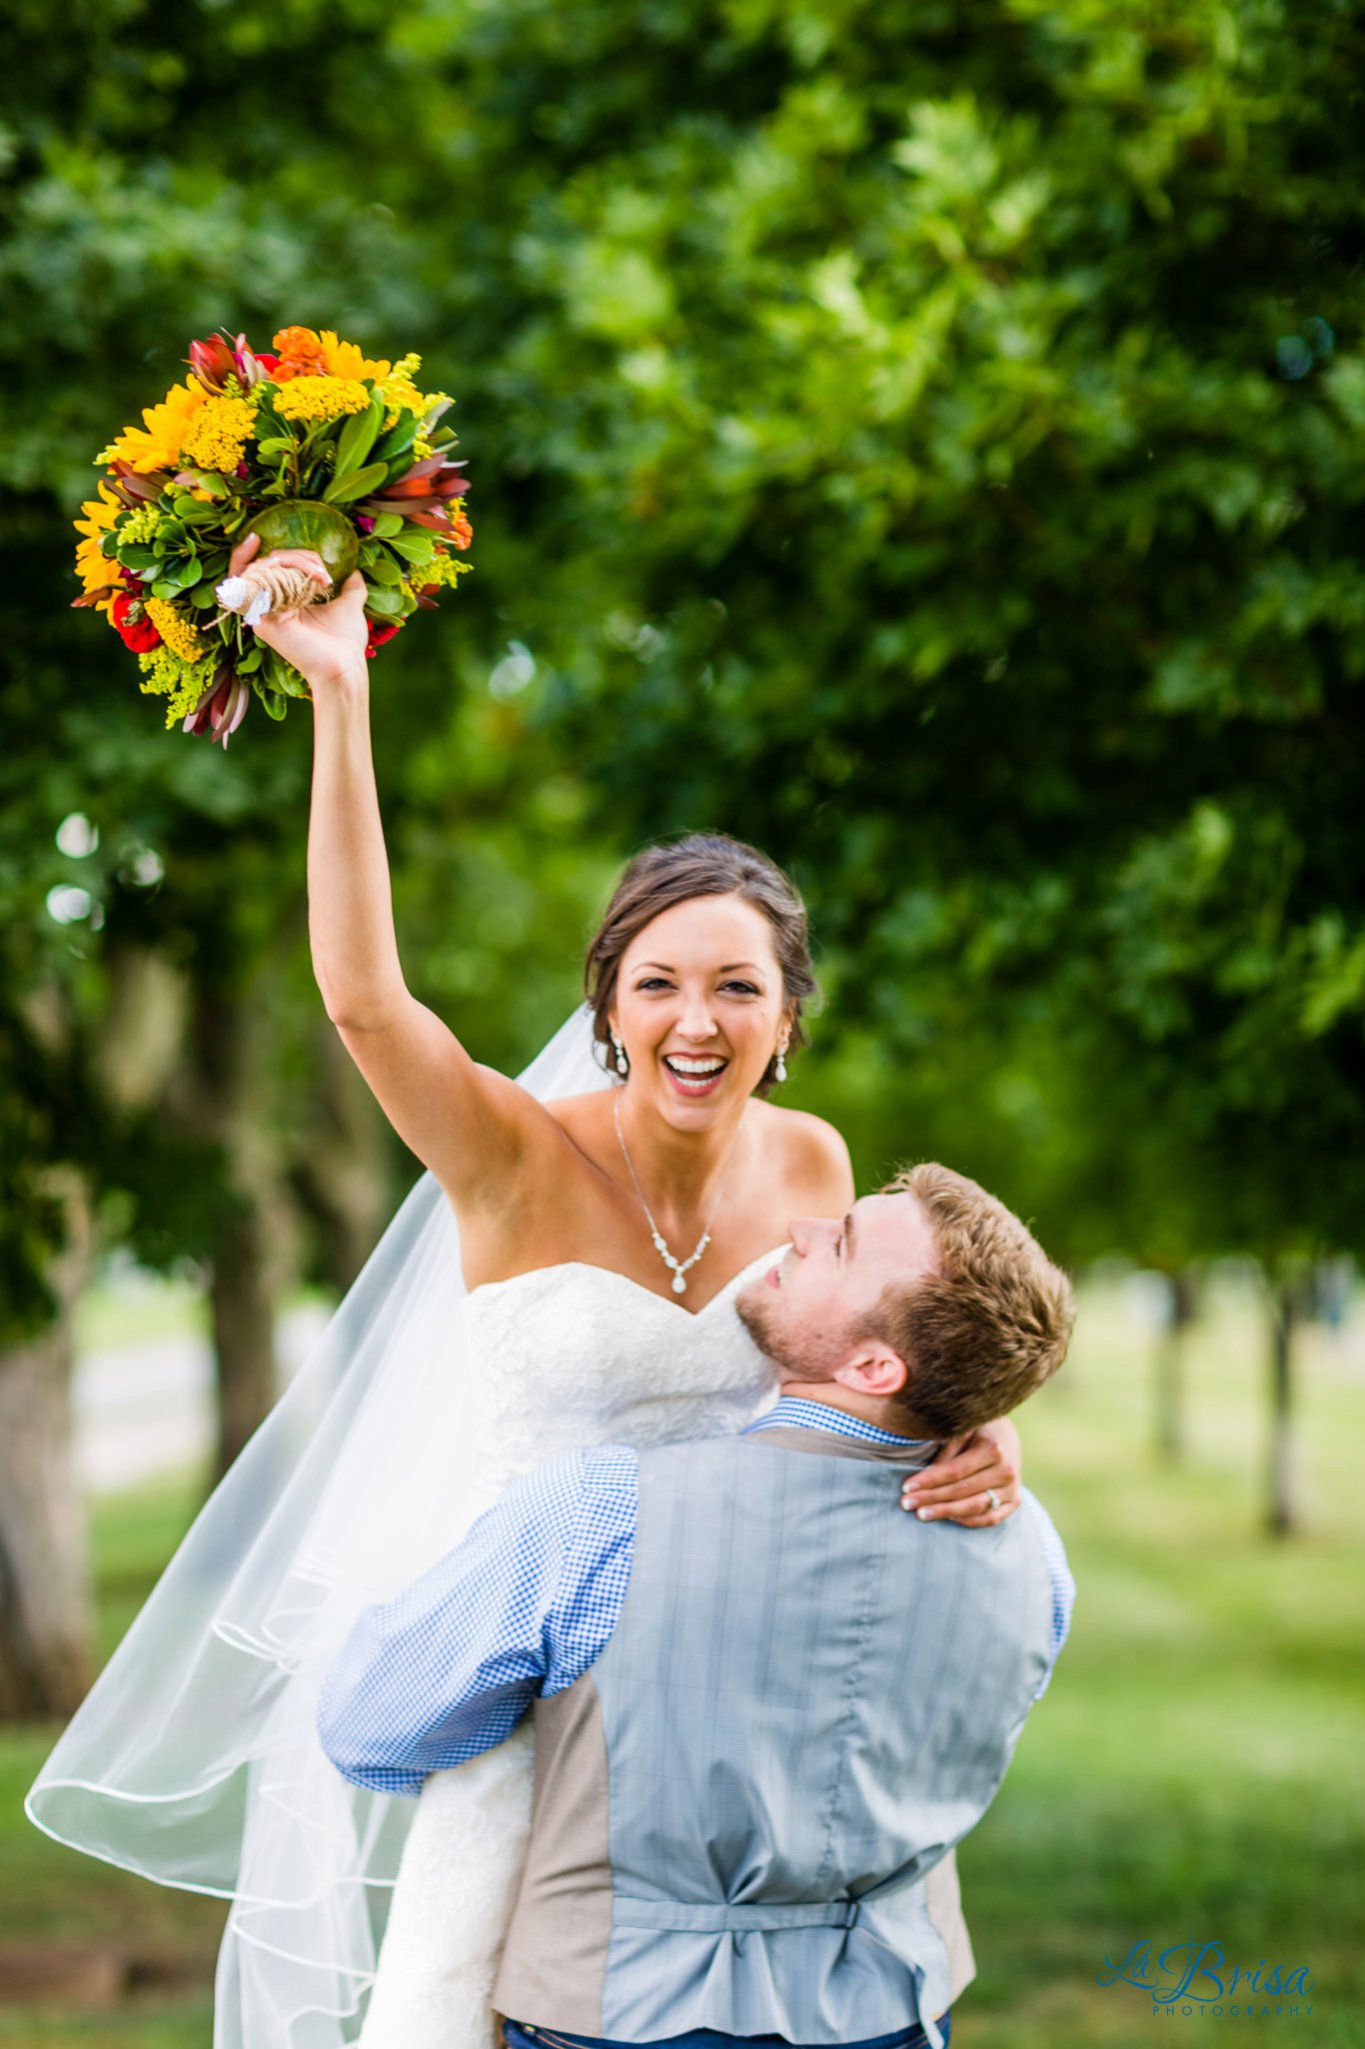 Megan & Brandon | Wedding Photography Preview | Kansas City, MO | Chris Hsieh